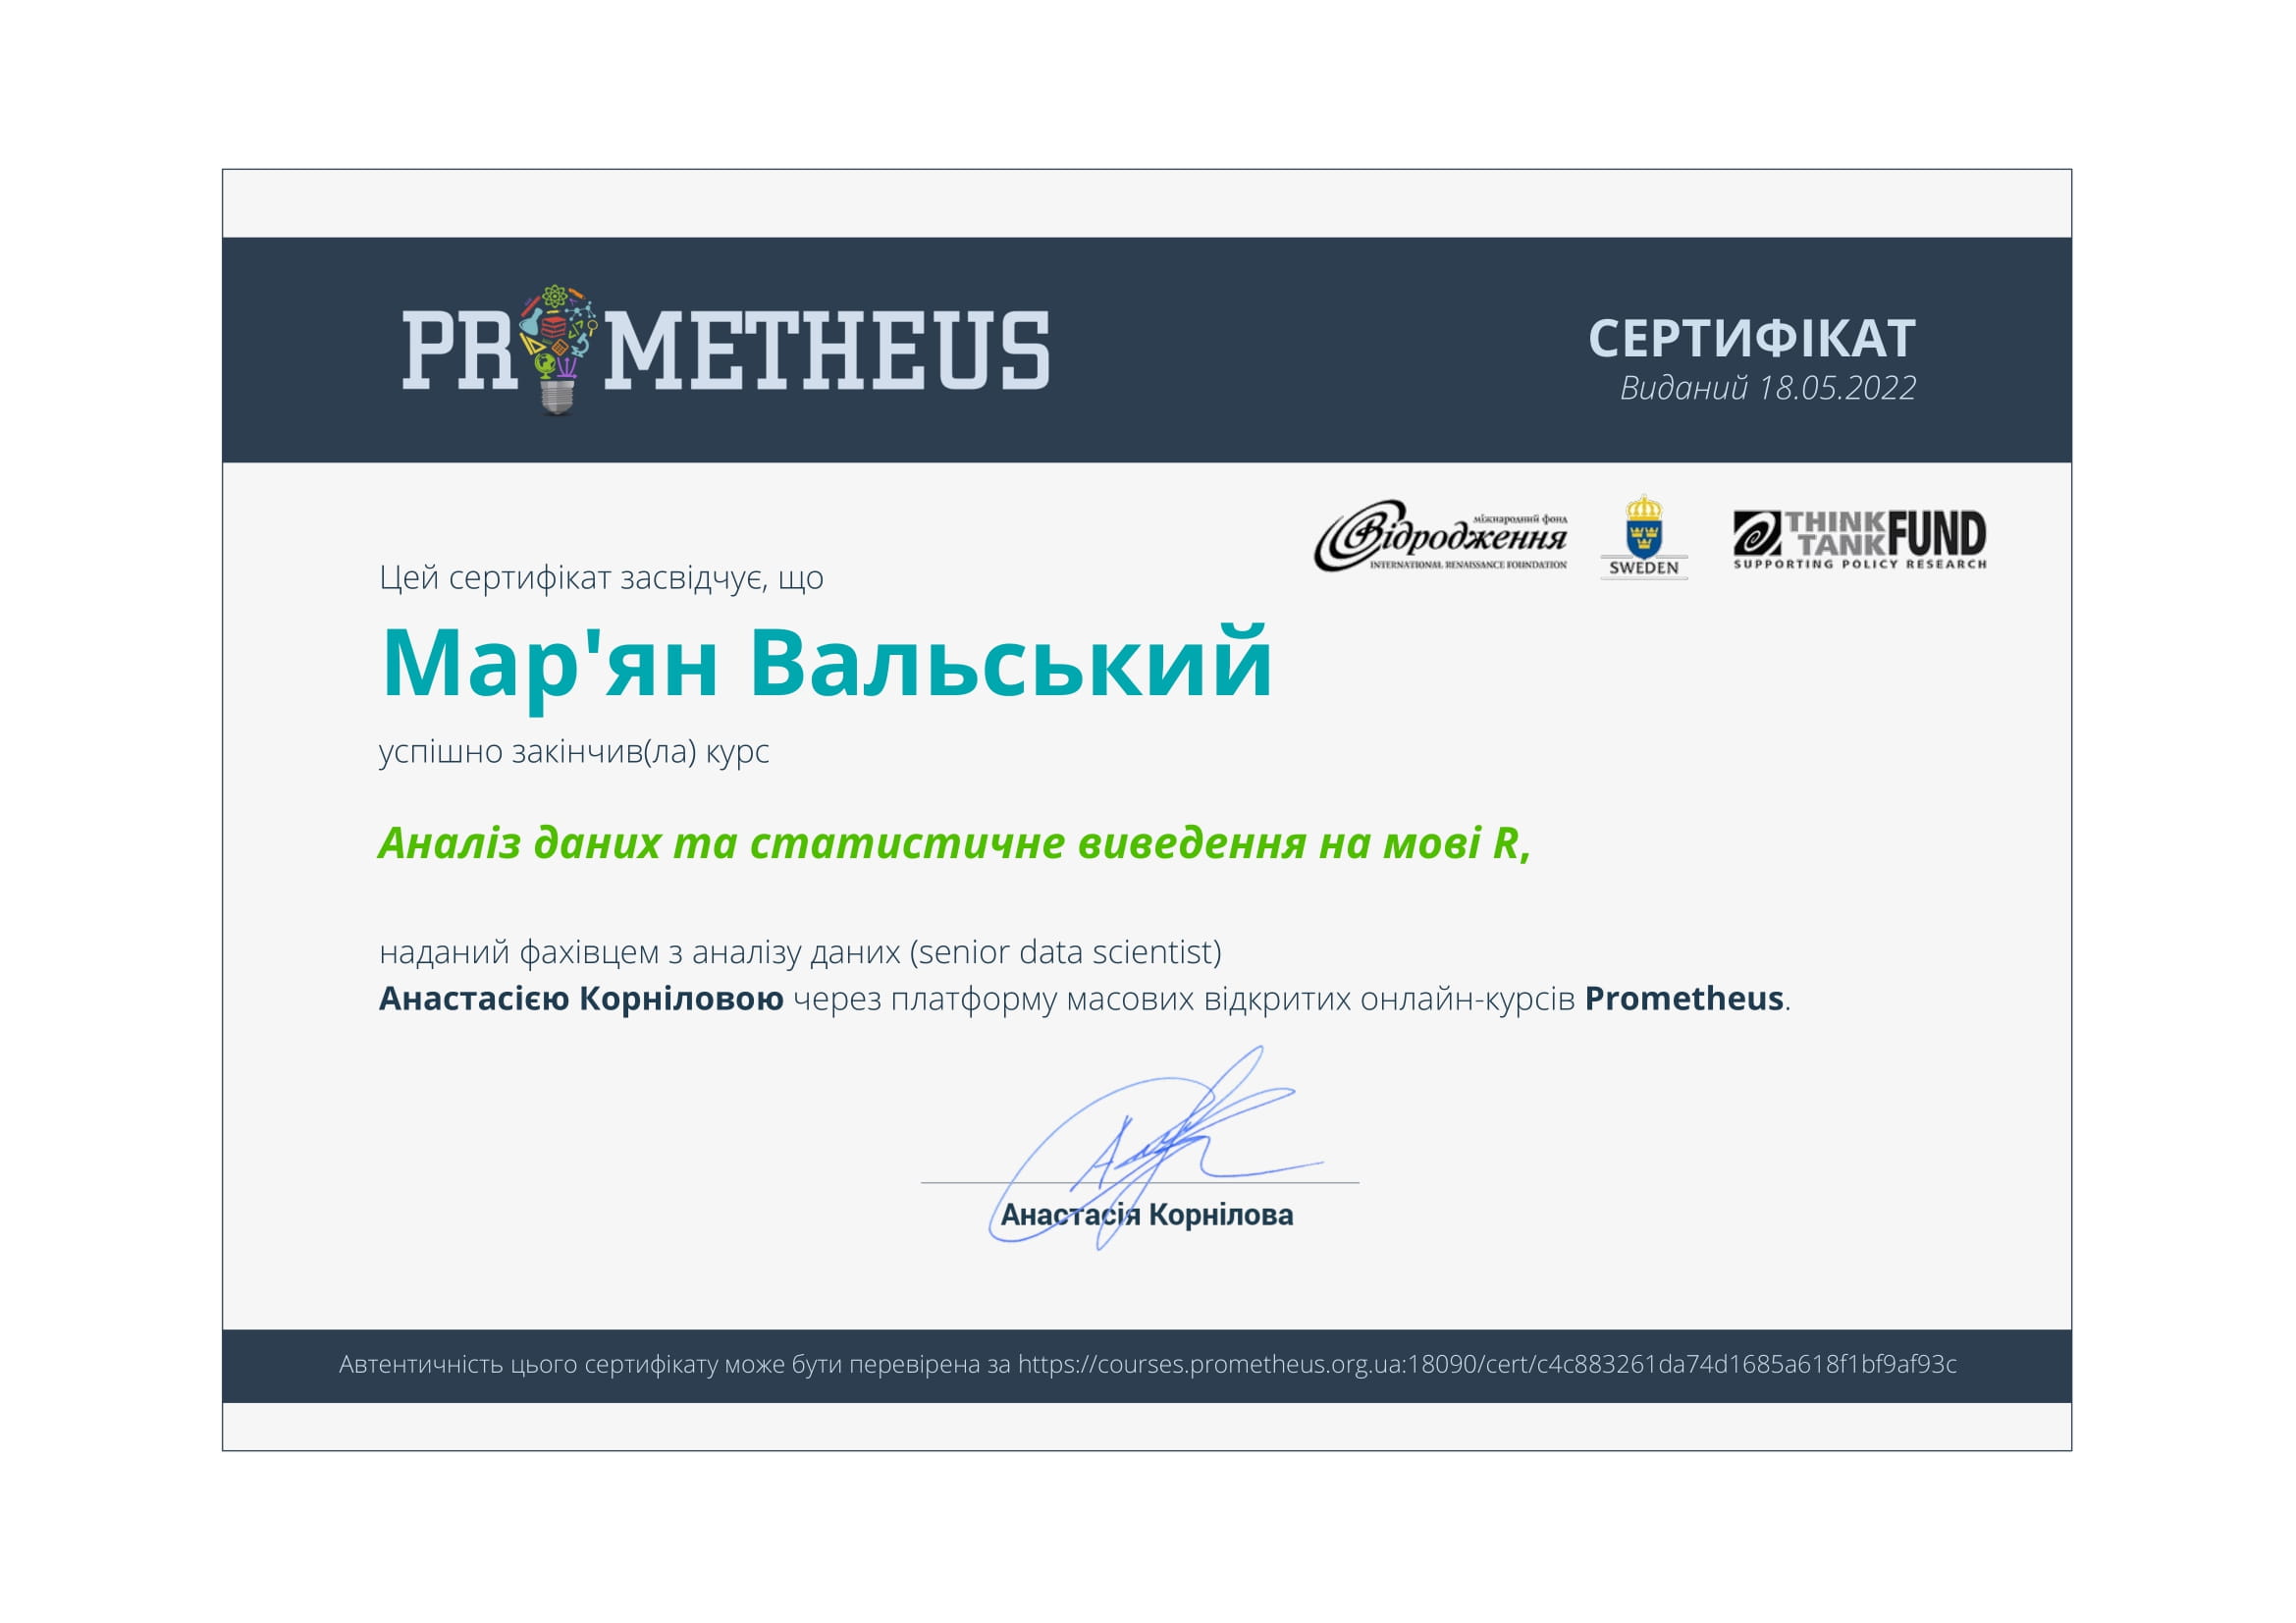 Certificate valsky 1